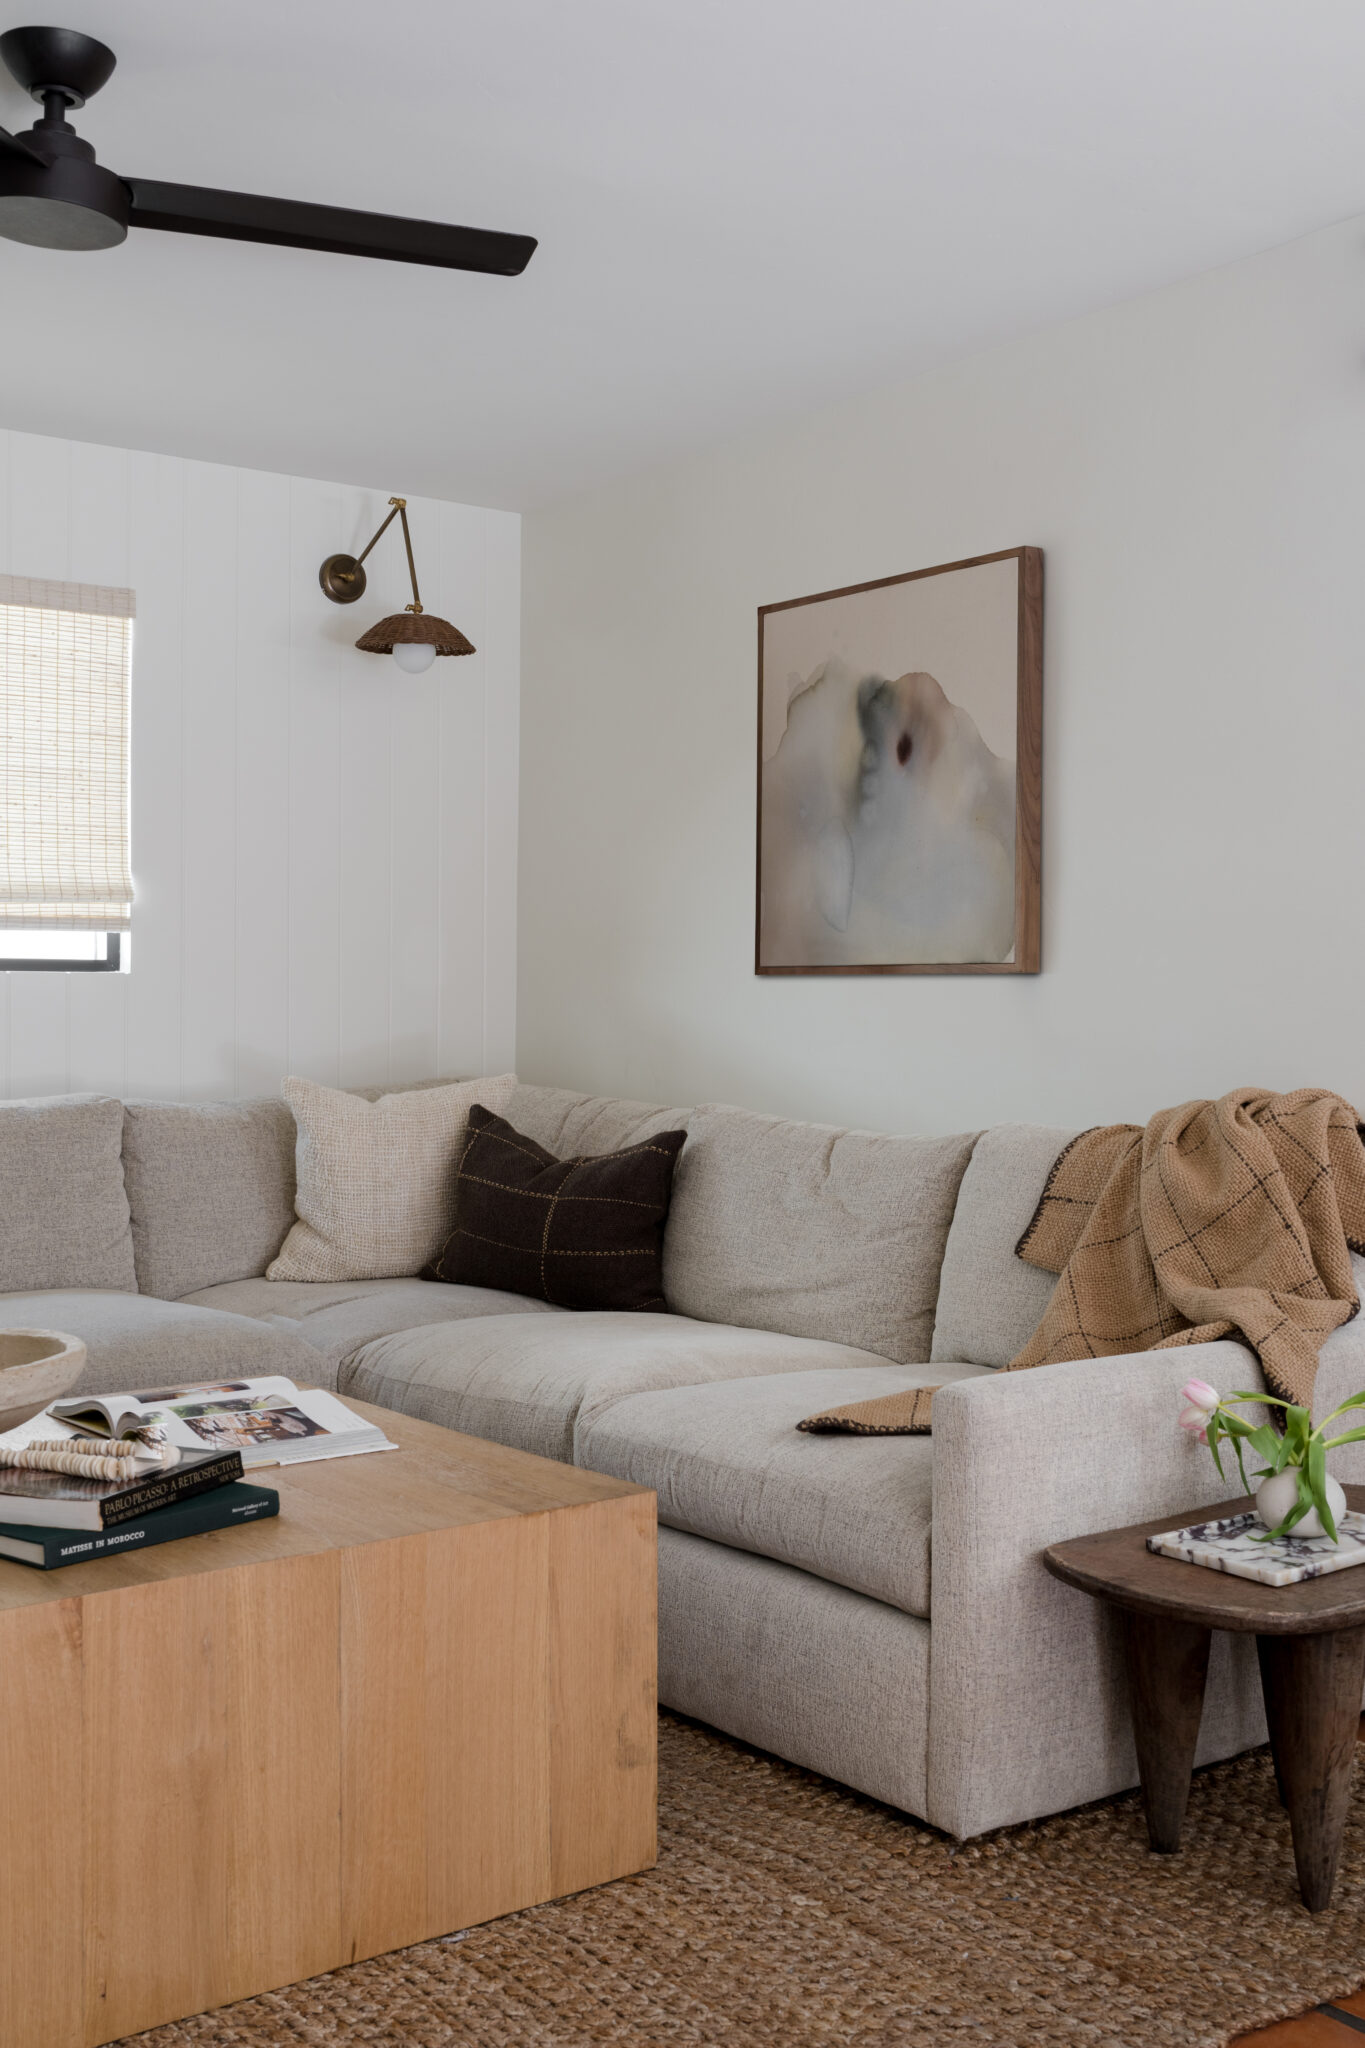 Spanish Bungalow living room remodel.